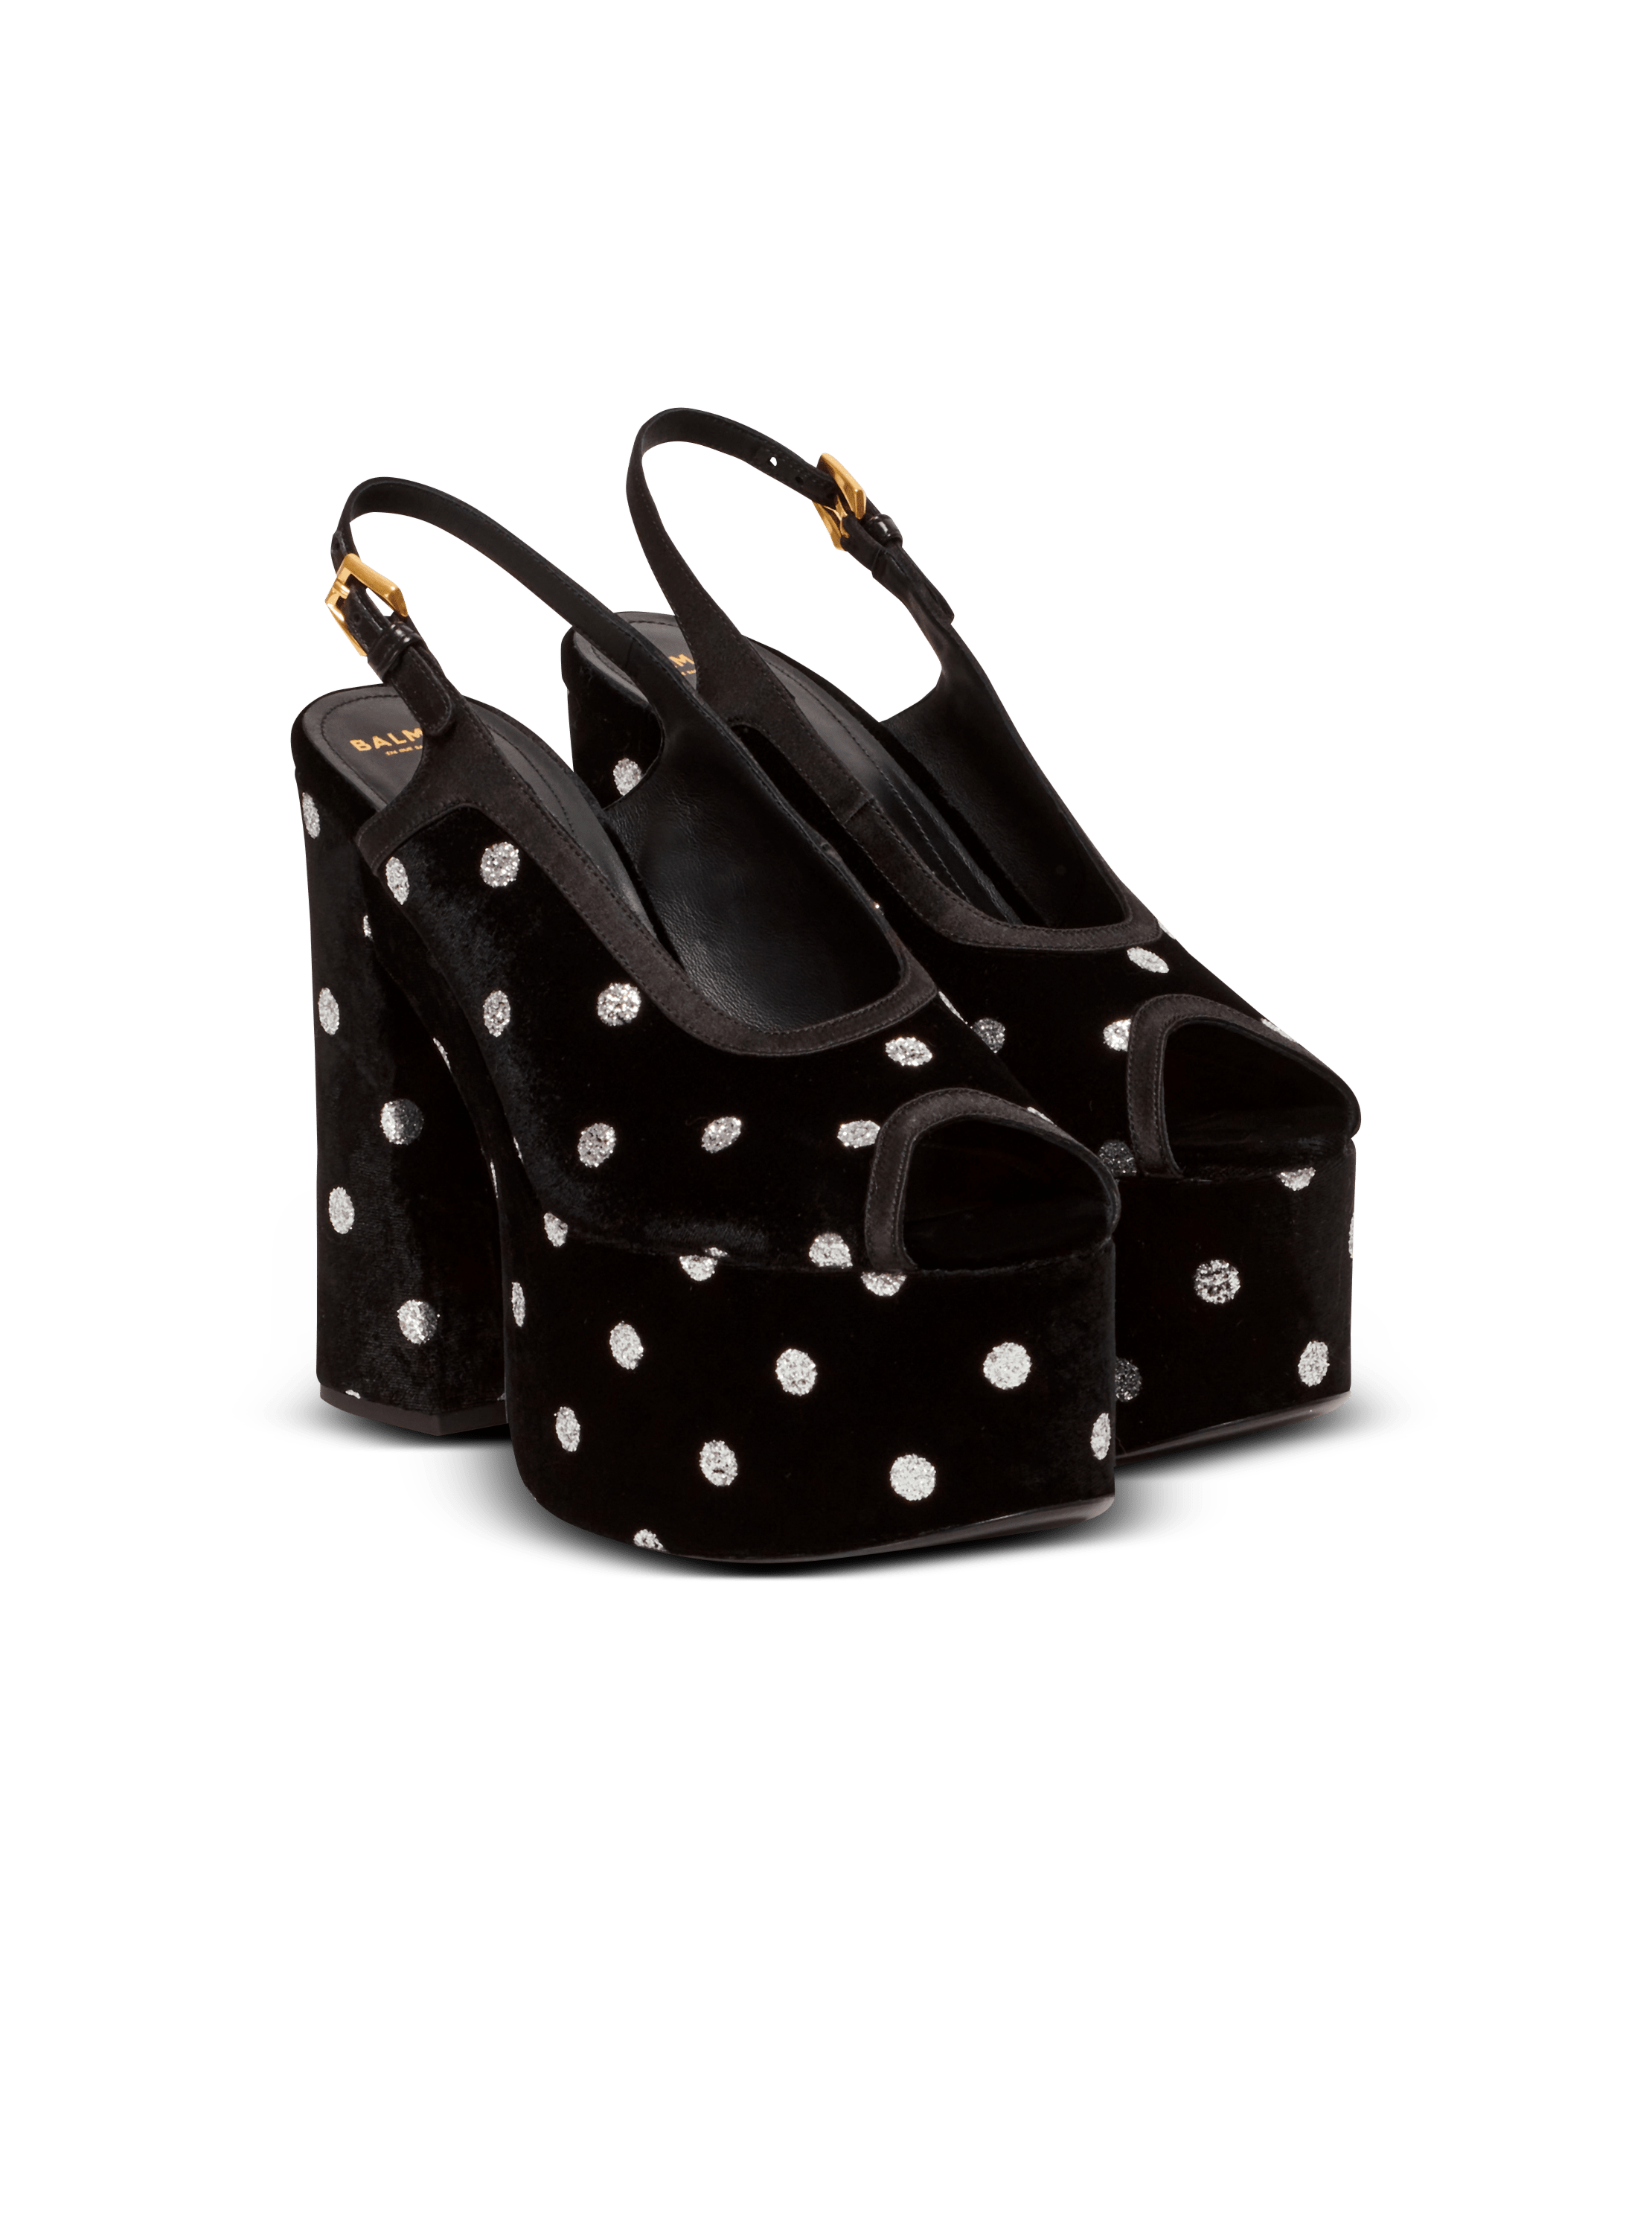 Cam sandals in velvet with polka dots